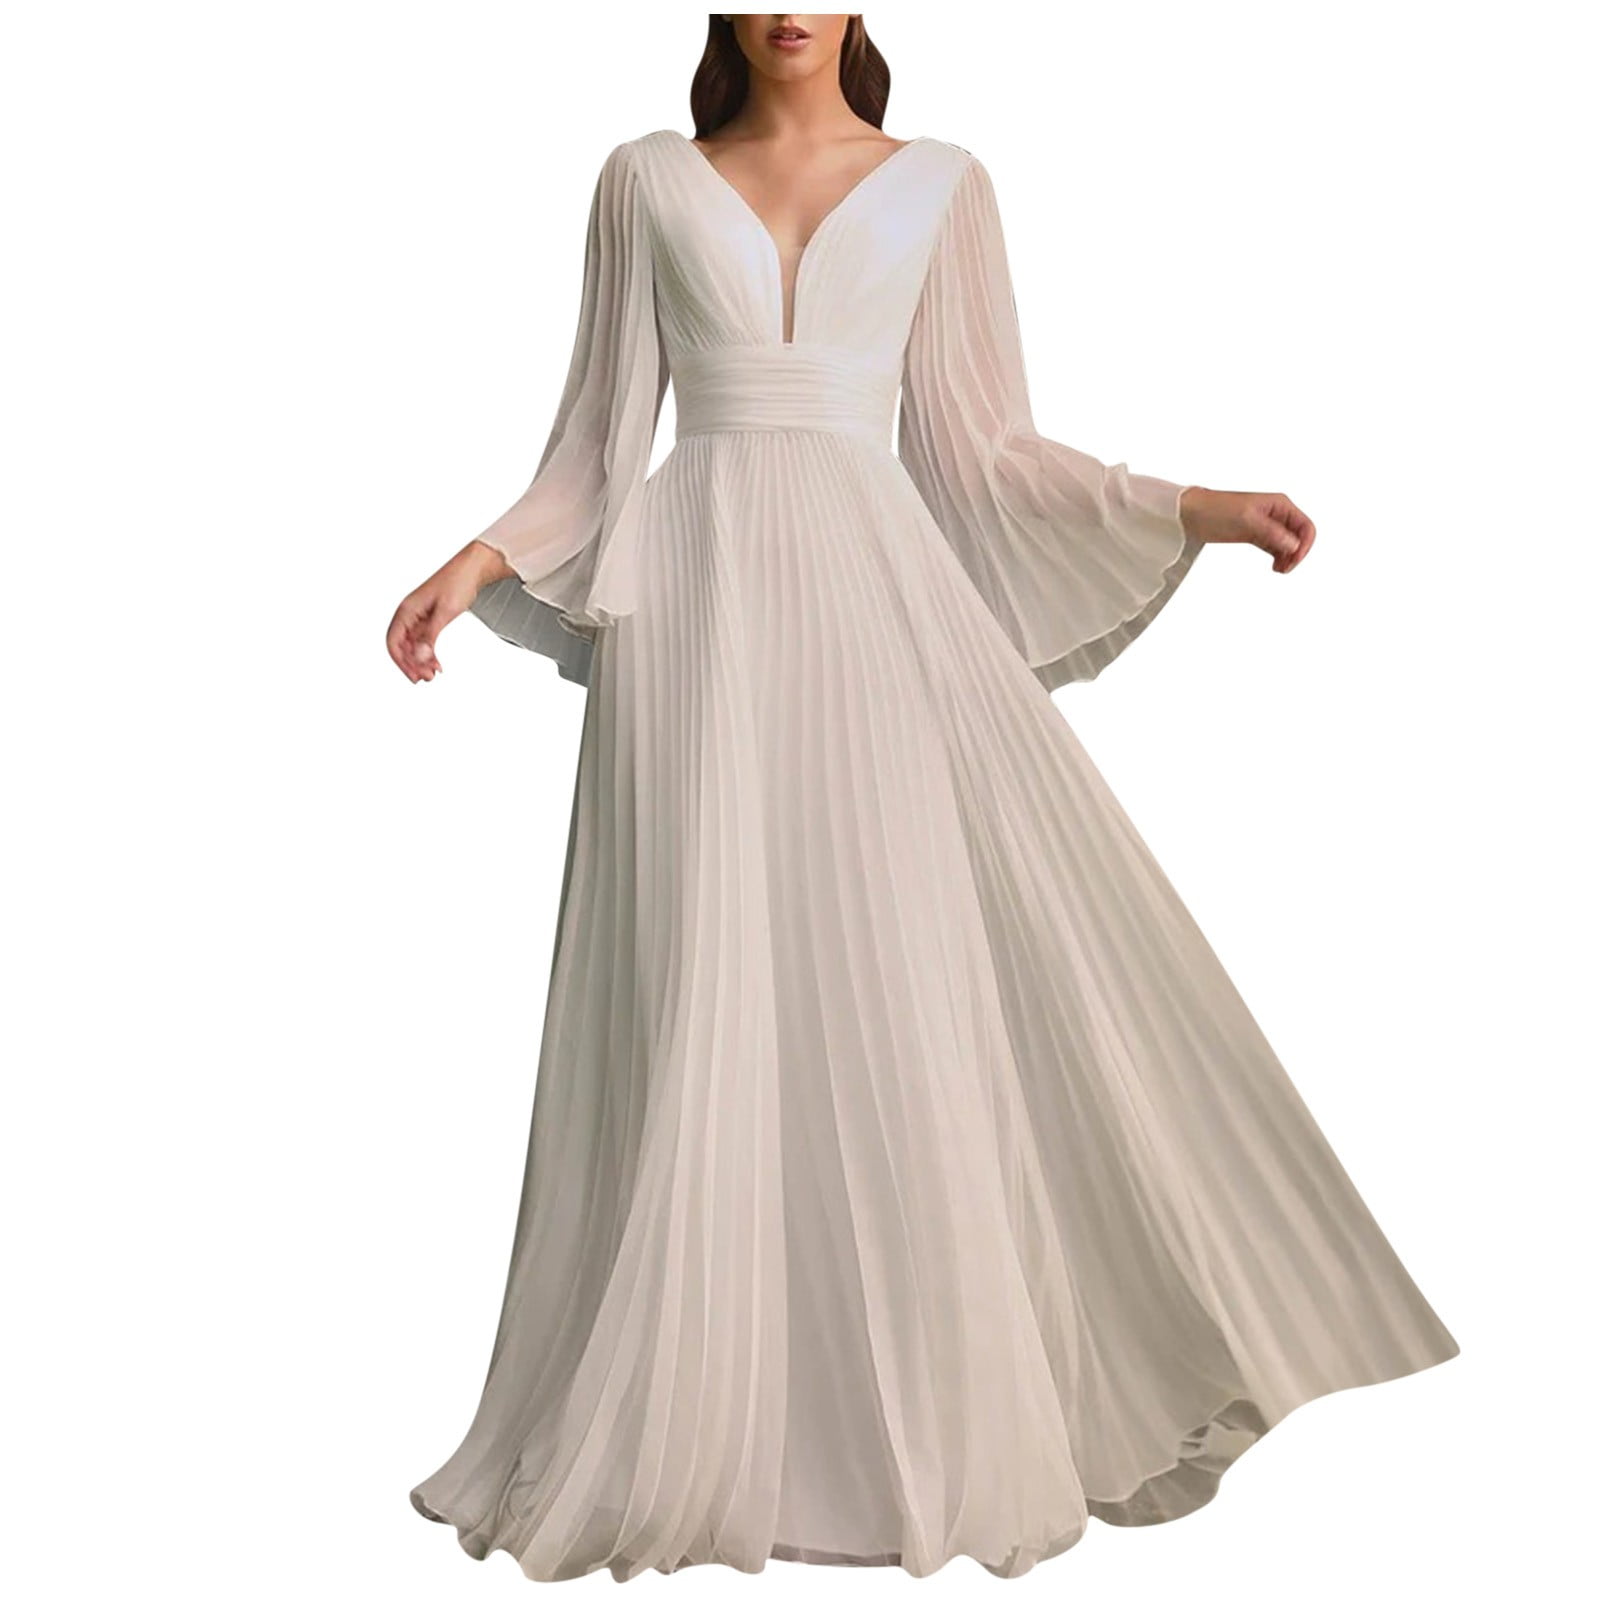 Women's Empire Waist Formal Dresses & Evening Gowns | Nordstrom